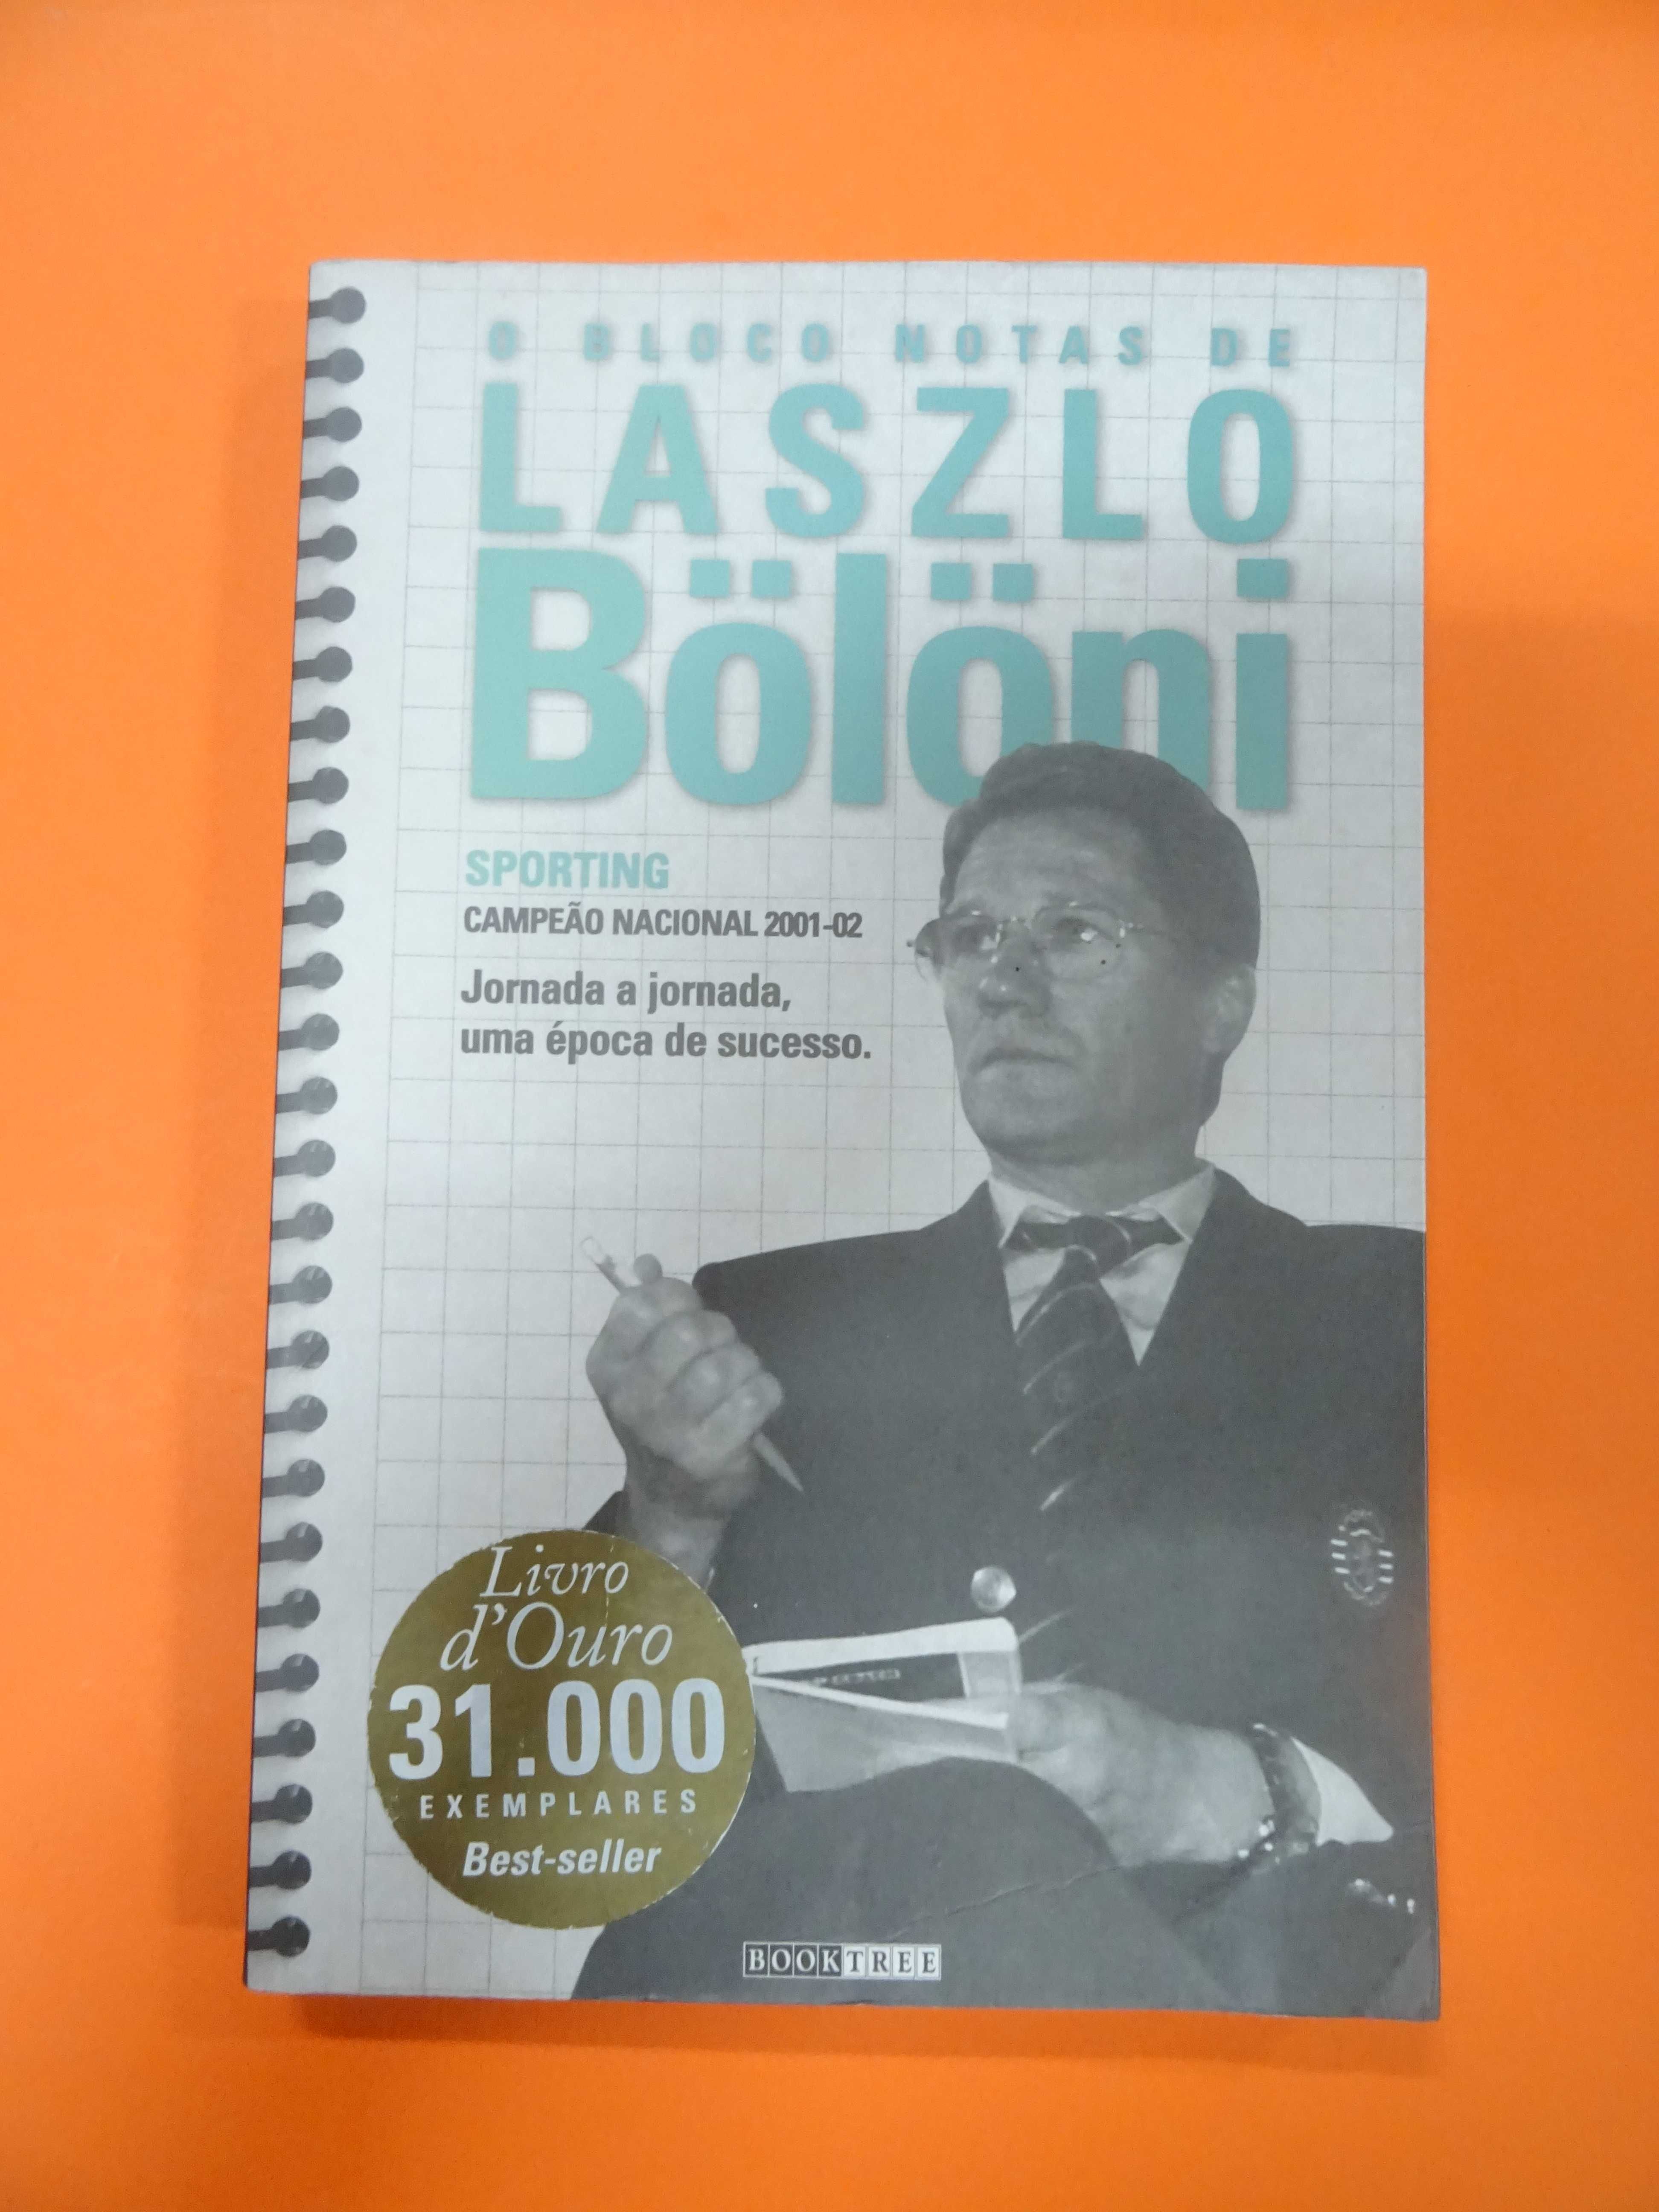 O Bloco Notas de Laszlo Boloni  - Luís Miguel Pereira